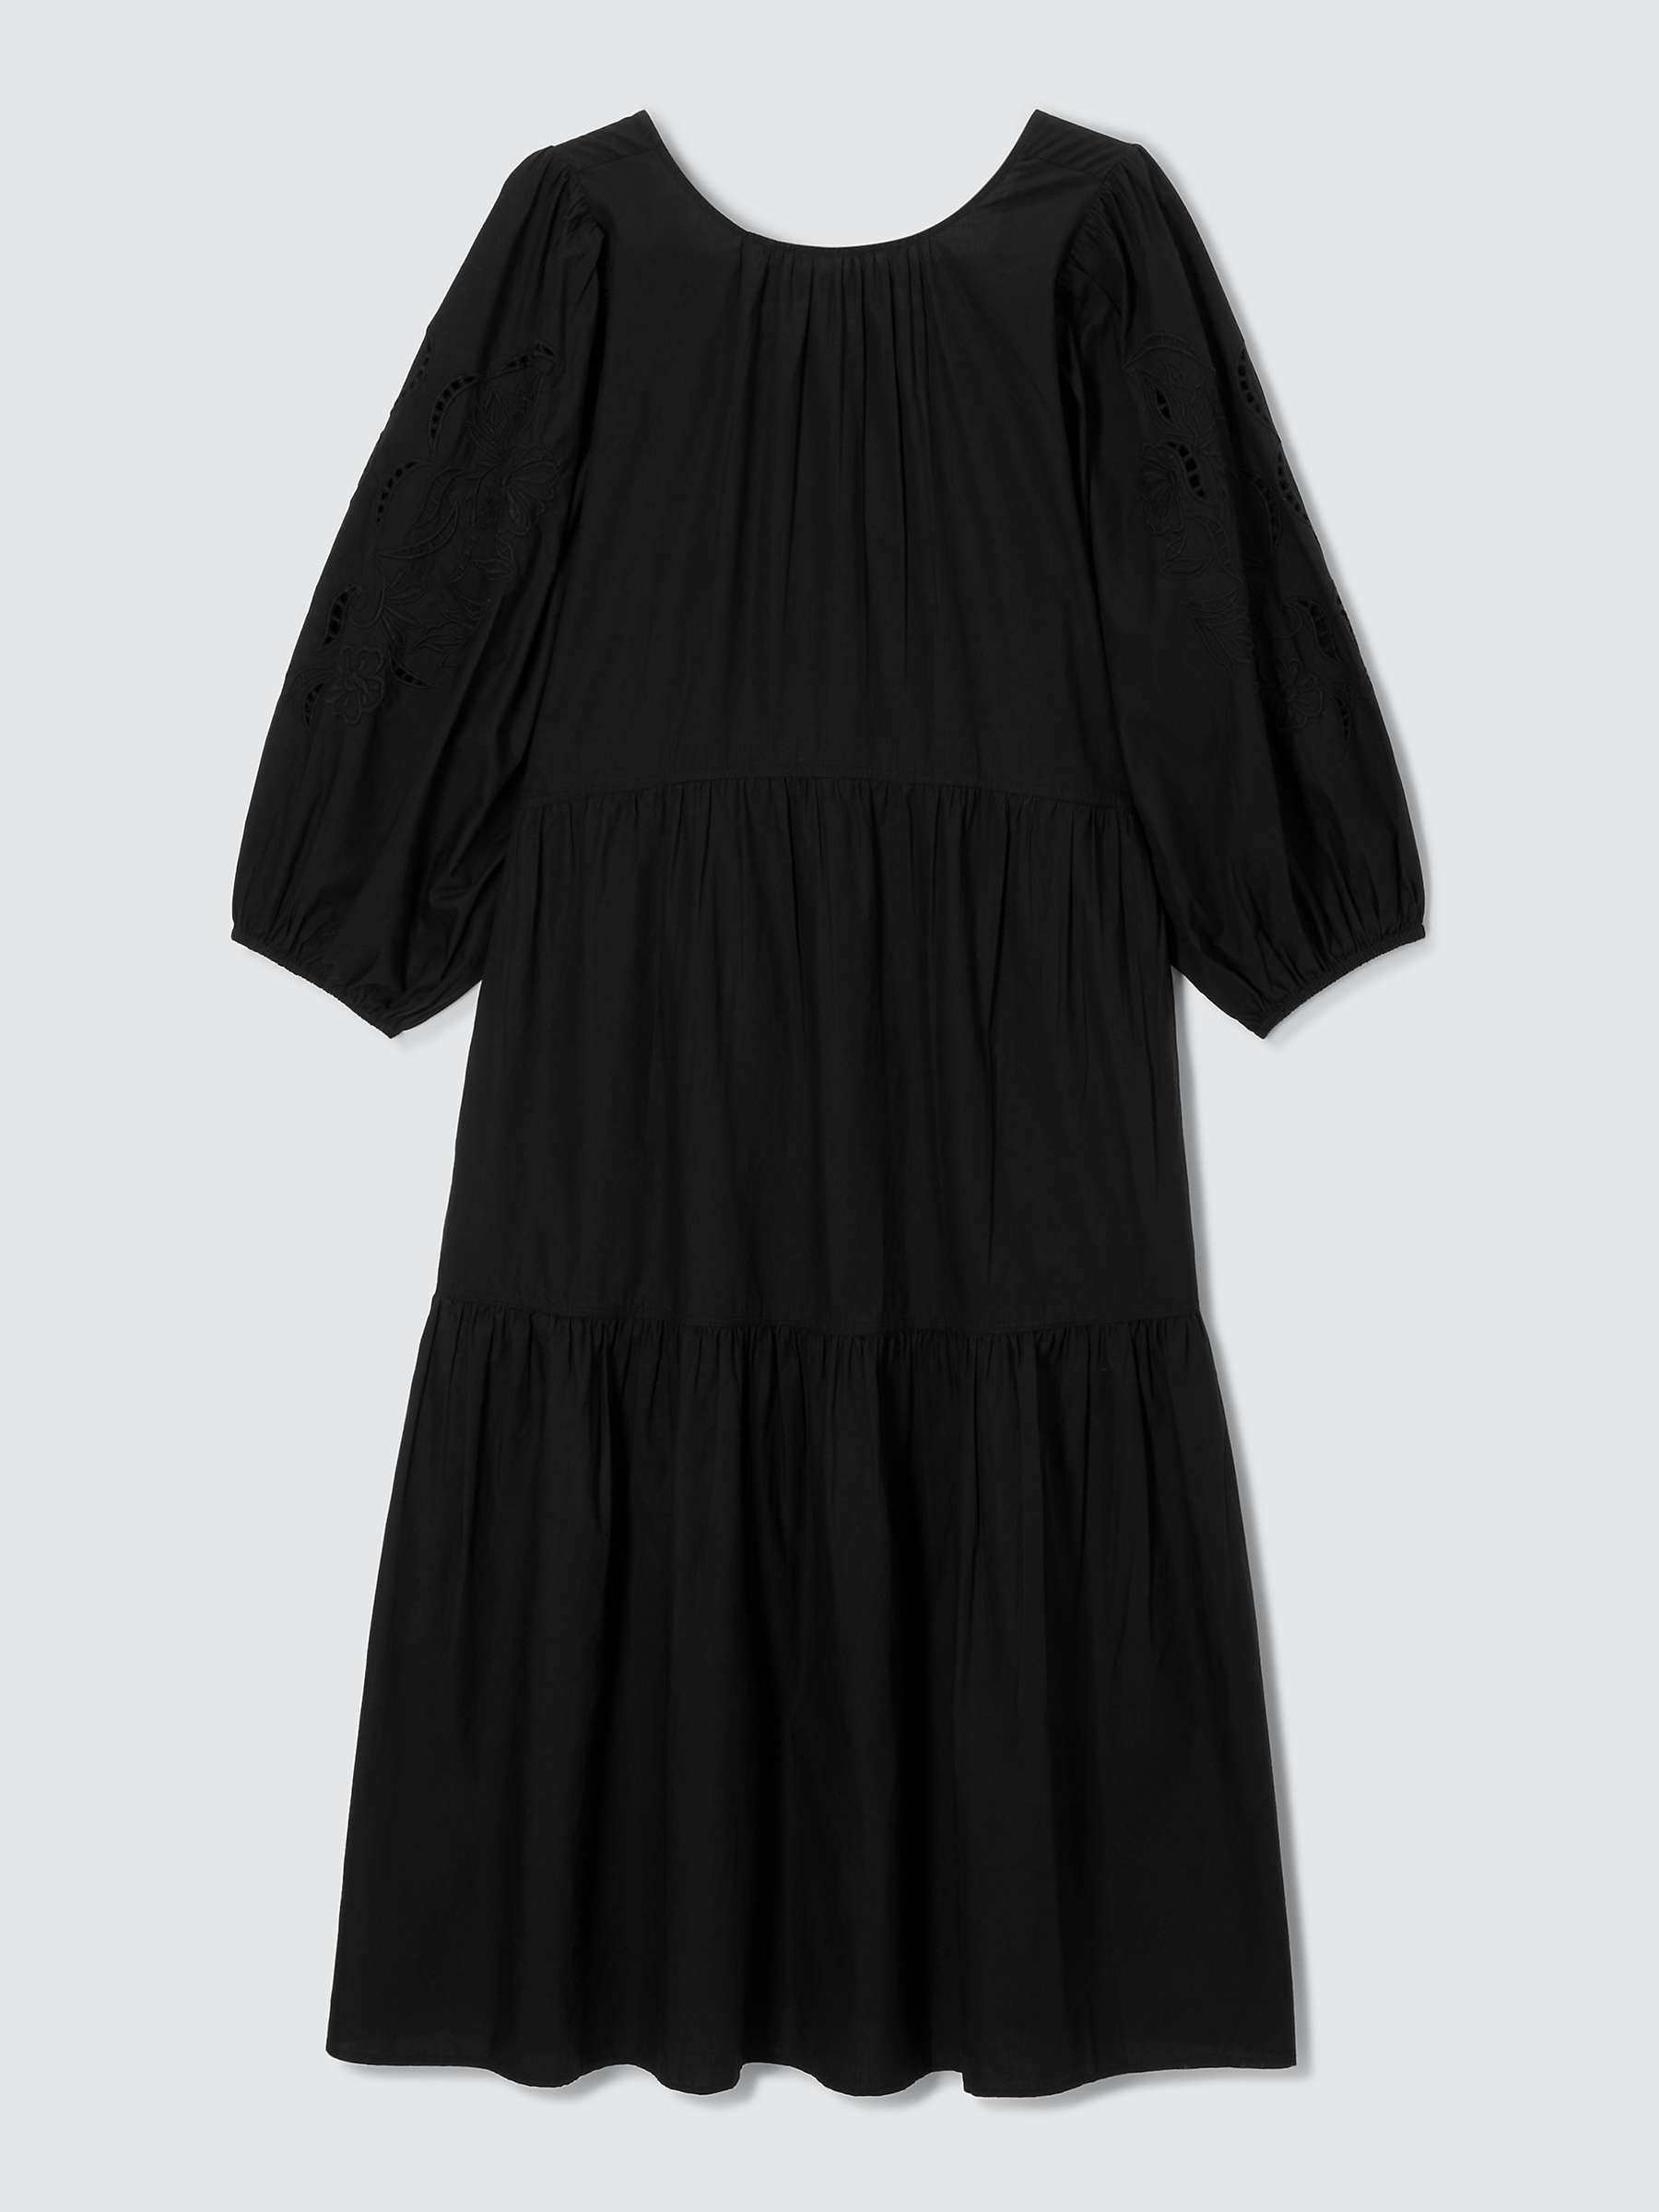 Buy John Lewis Cutwork Sleeve Tiered Dress Online at johnlewis.com